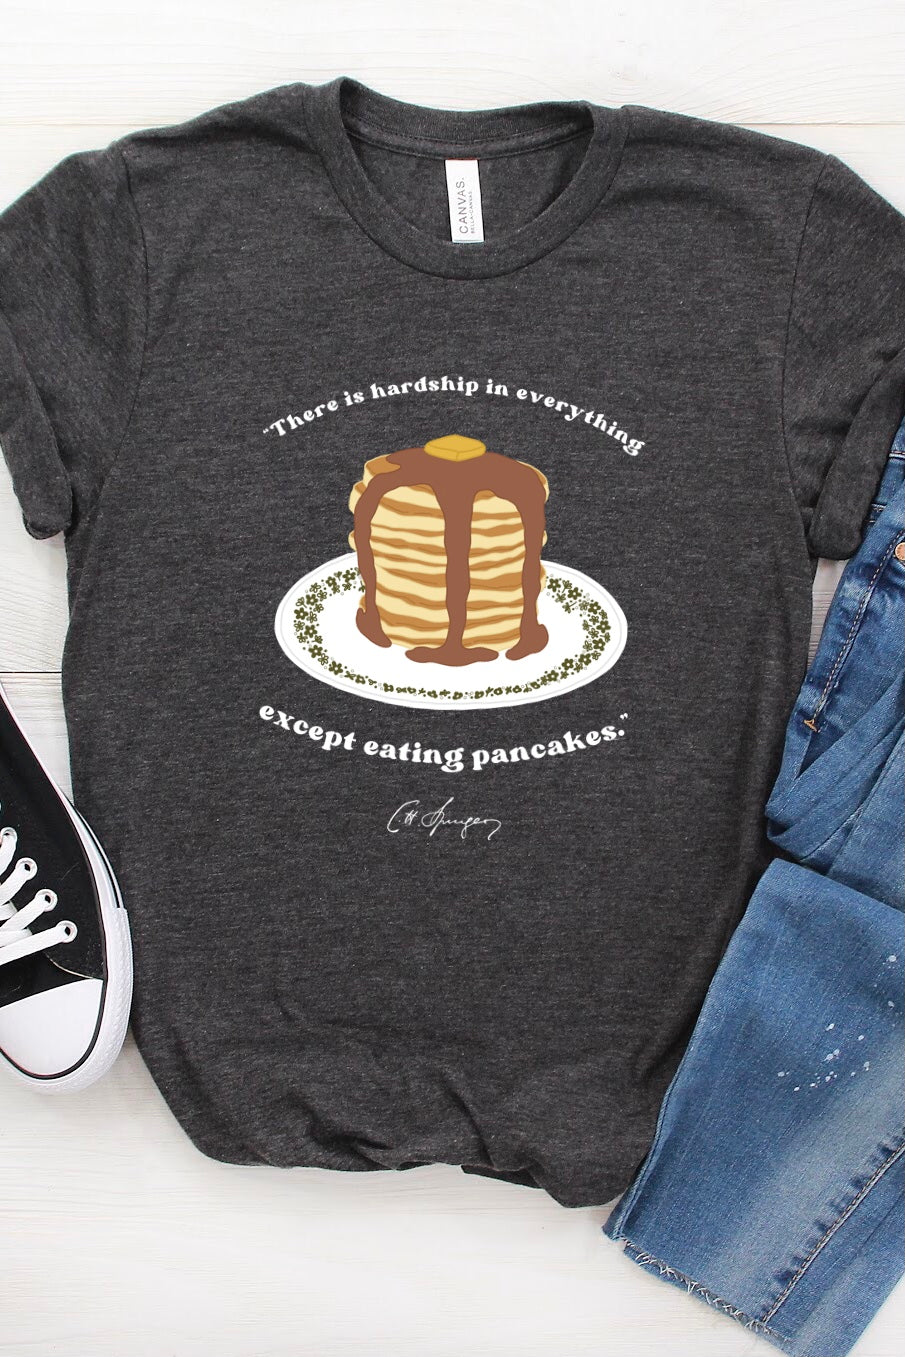 Spurgeon and His Pancakes Tee